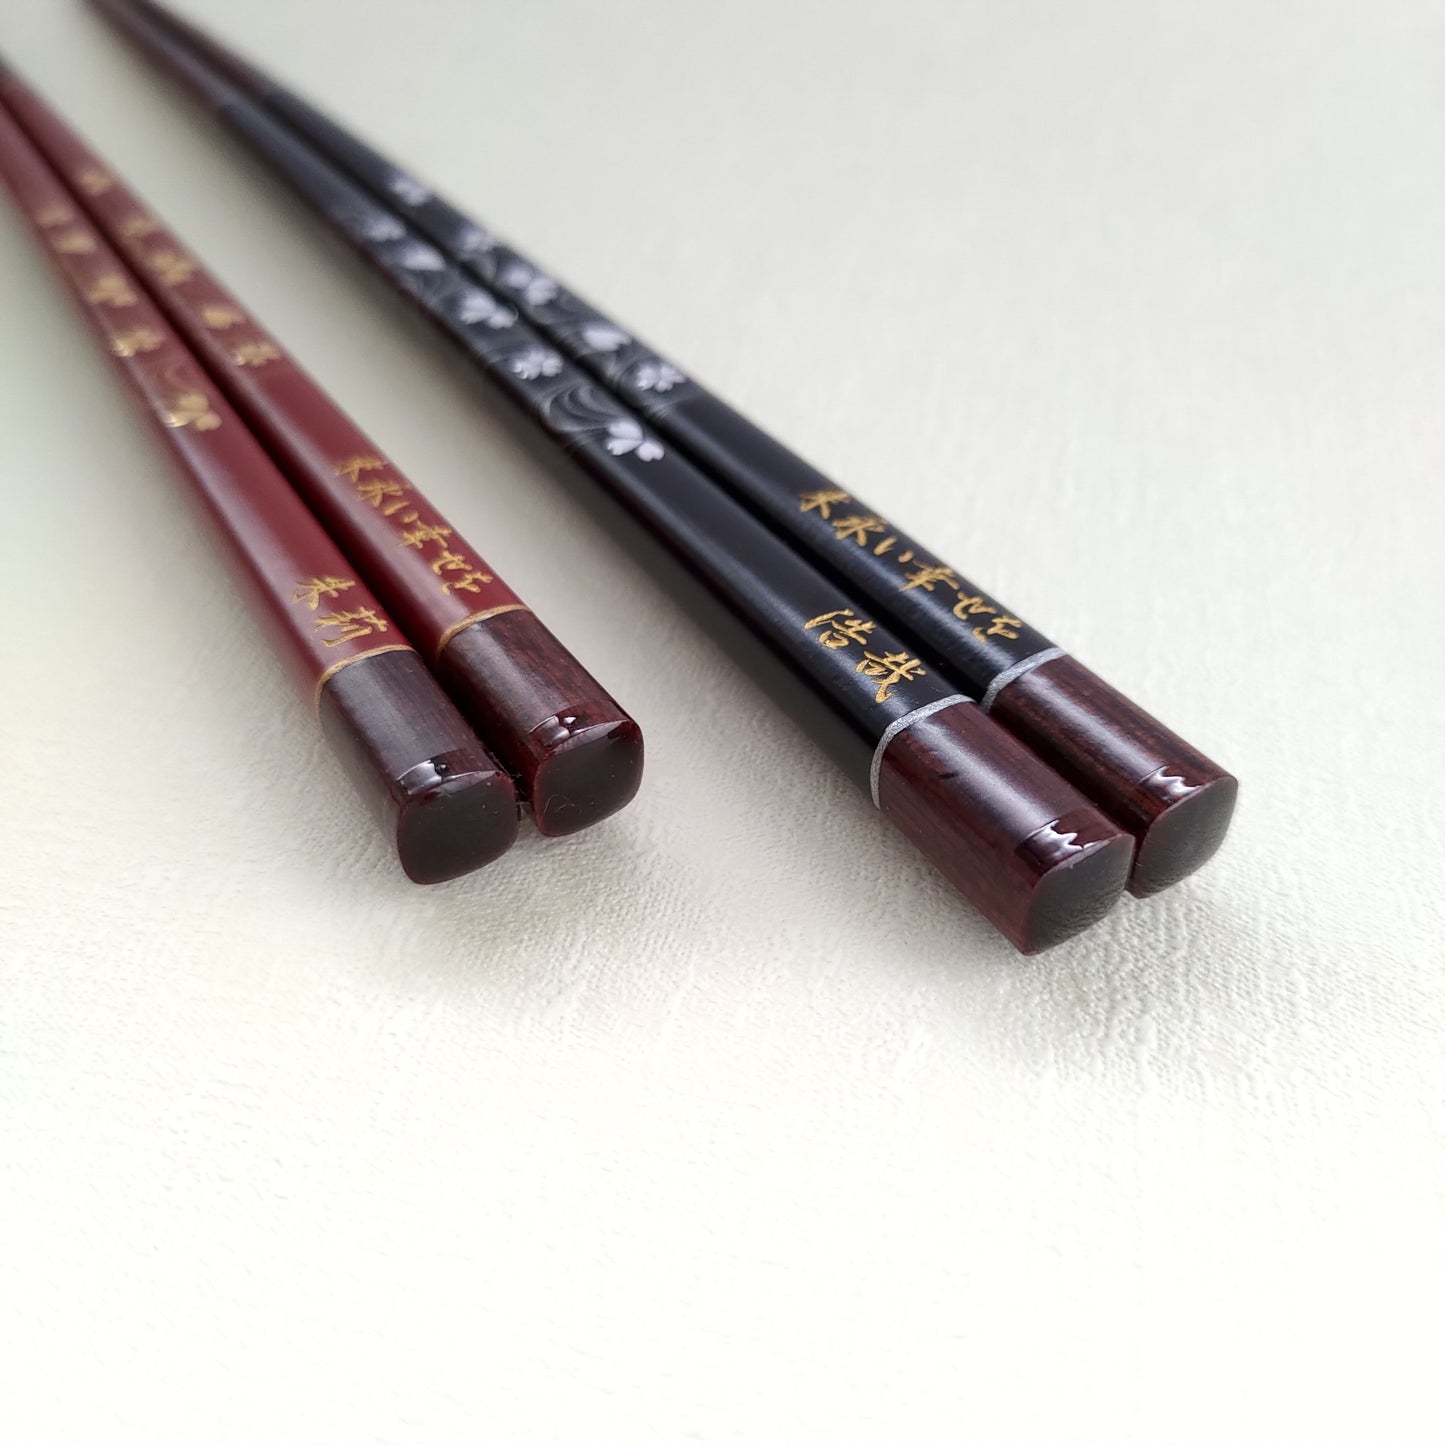 Elegant Japanese chopsticks with cherry blossoms on river stream black red - SINGLE PAIR